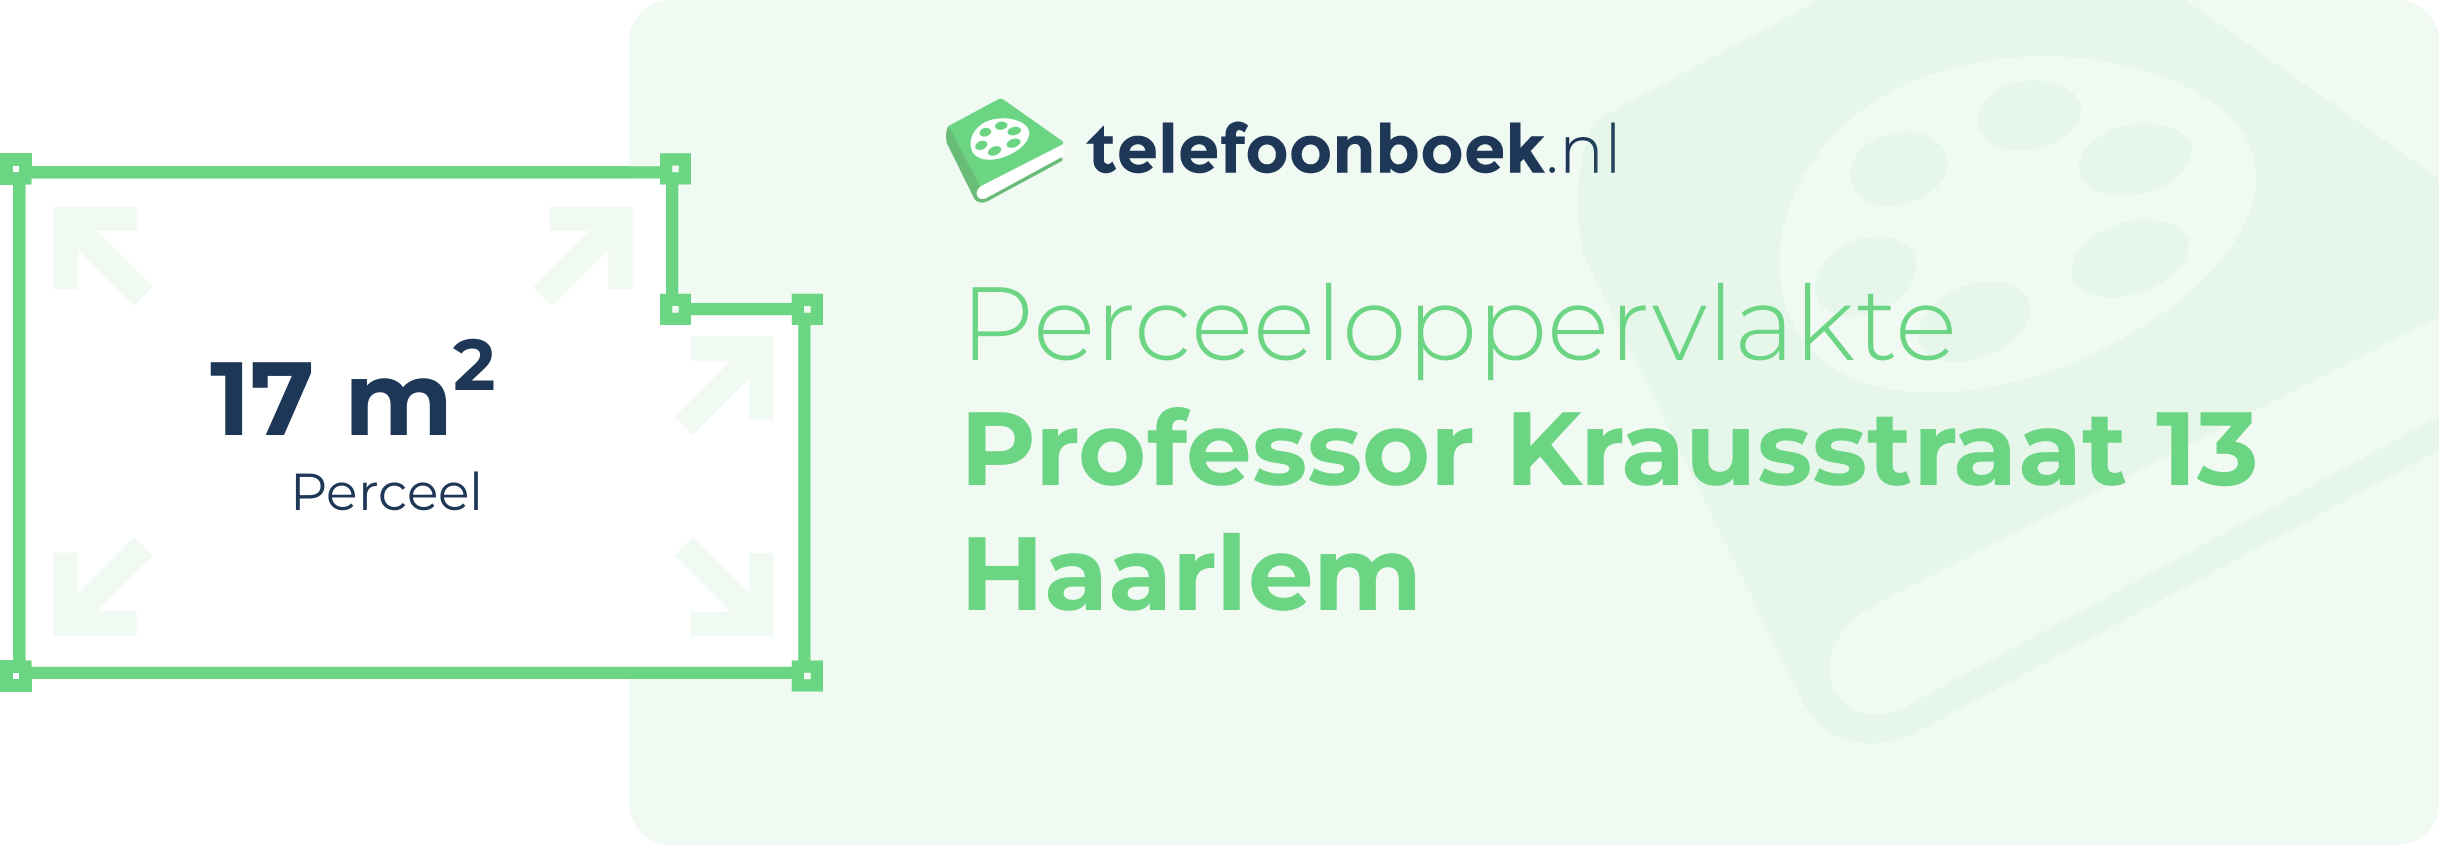 Perceeloppervlakte Professor Krausstraat 13 Haarlem